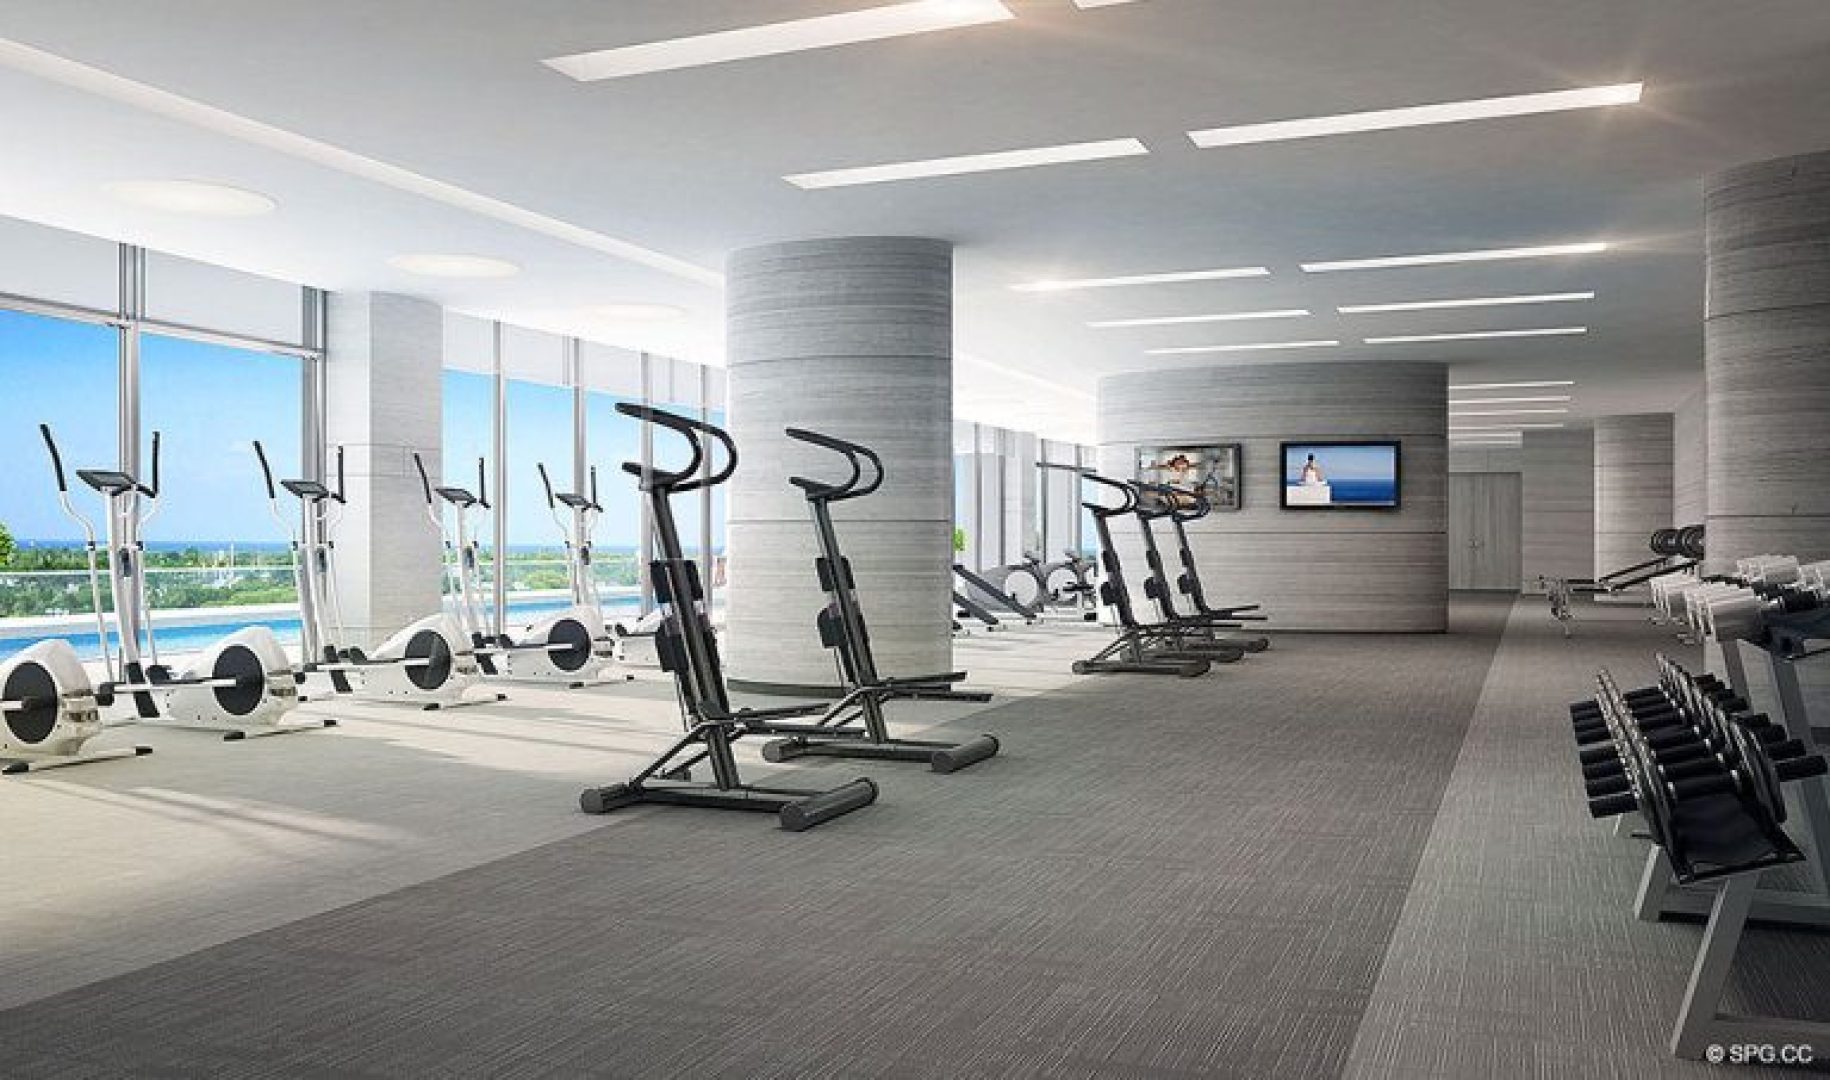 Fitness Center em Riva, Luxo Waterfront Condos em Fort Lauderdale, Florida 33304.